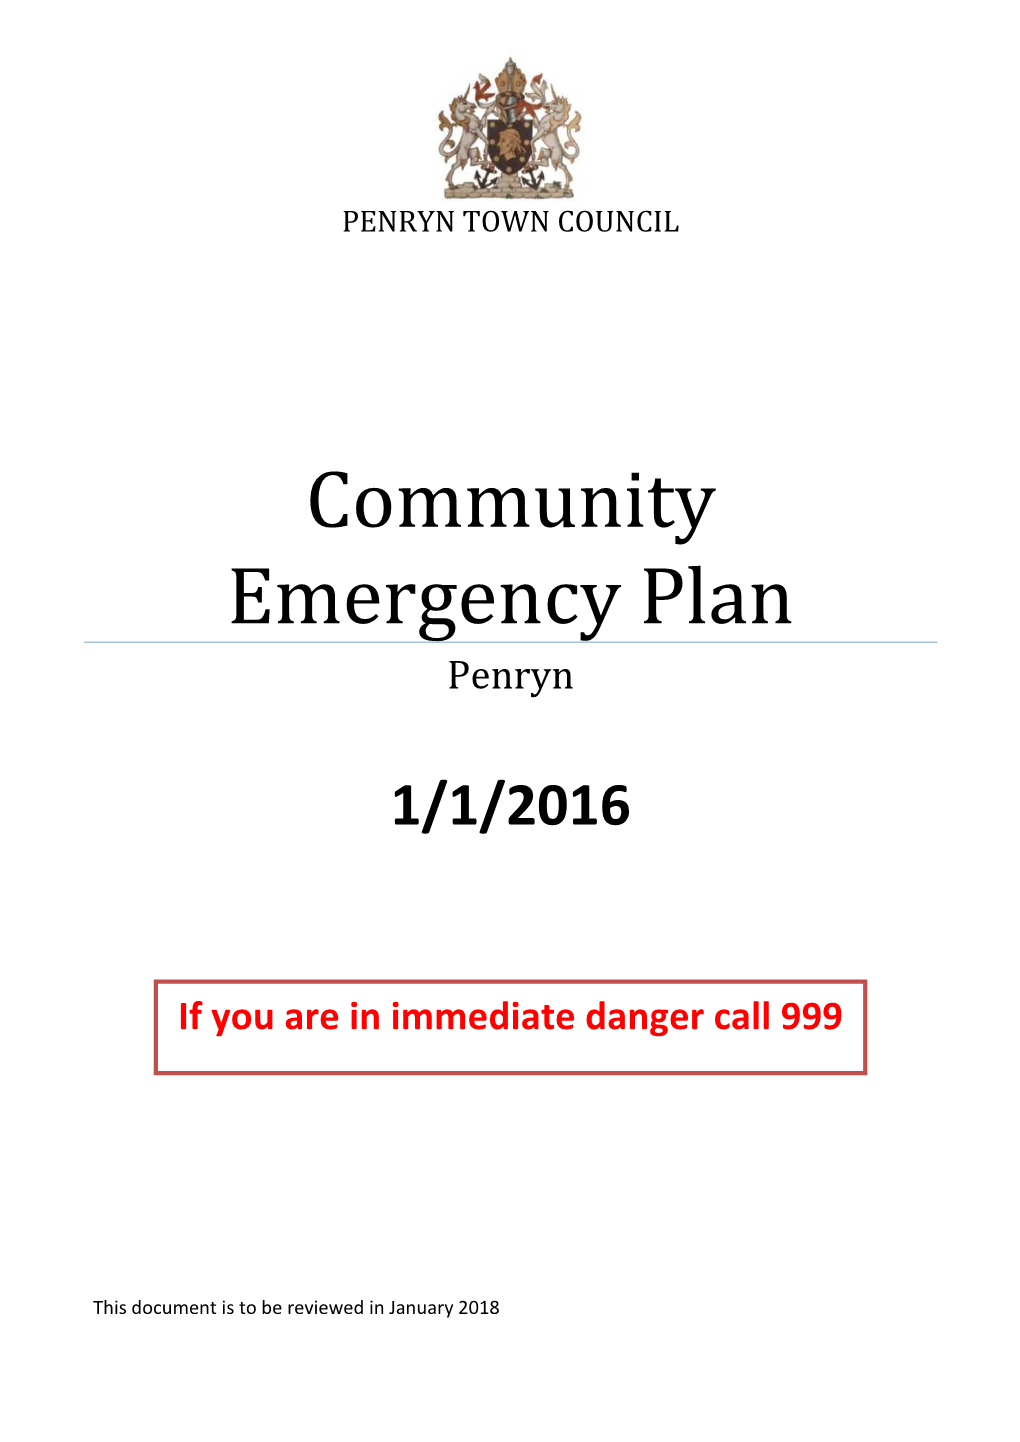 Community Emergency Plan (PDF)